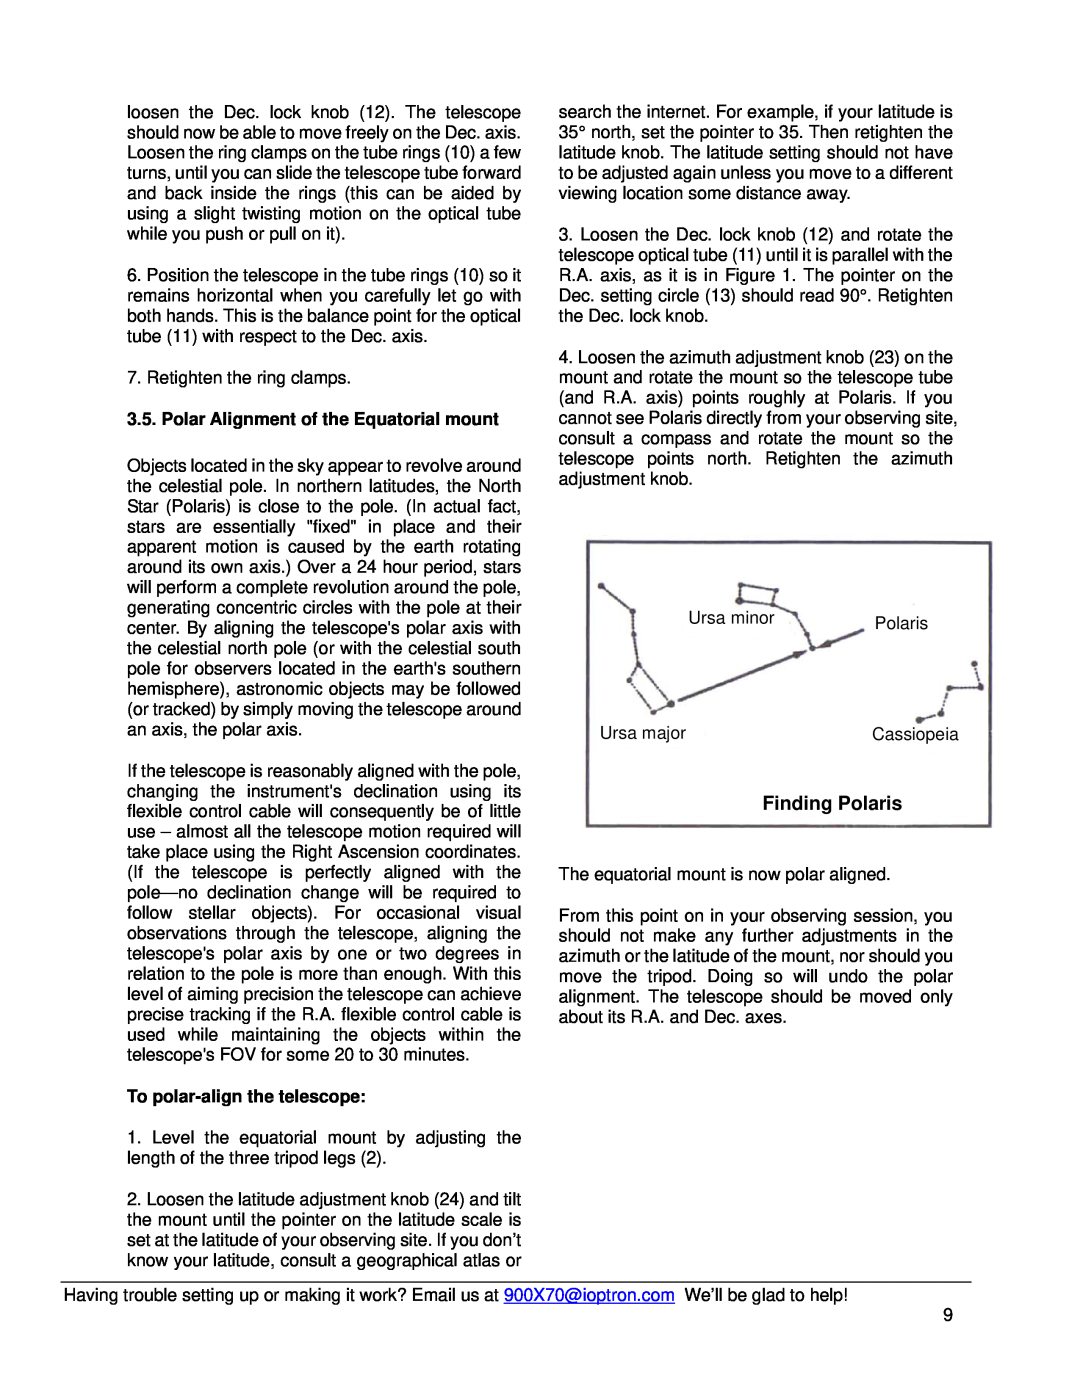 iOptron 6001, 6002 instruction manual Finding Polaris, Polar Alignment of the Equatorial mount, To polar-align the telescope 